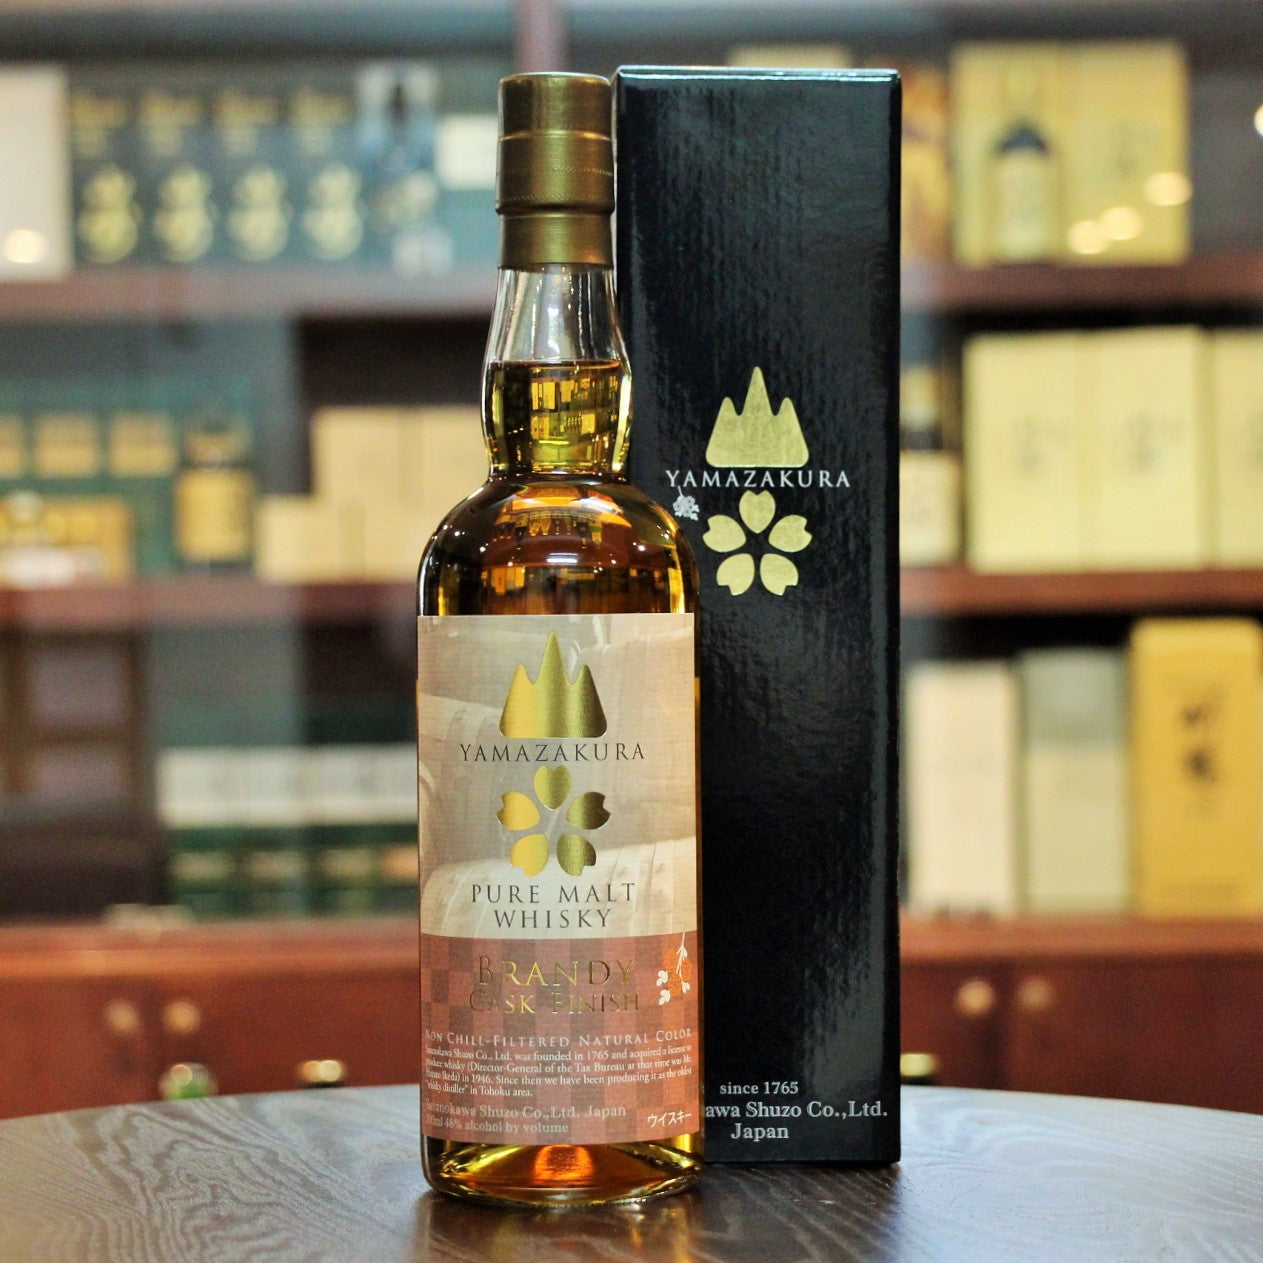 A Brandy Cask Finish to a wonderful whisky from Yamazakura. Available on Mizunara The Shop HK